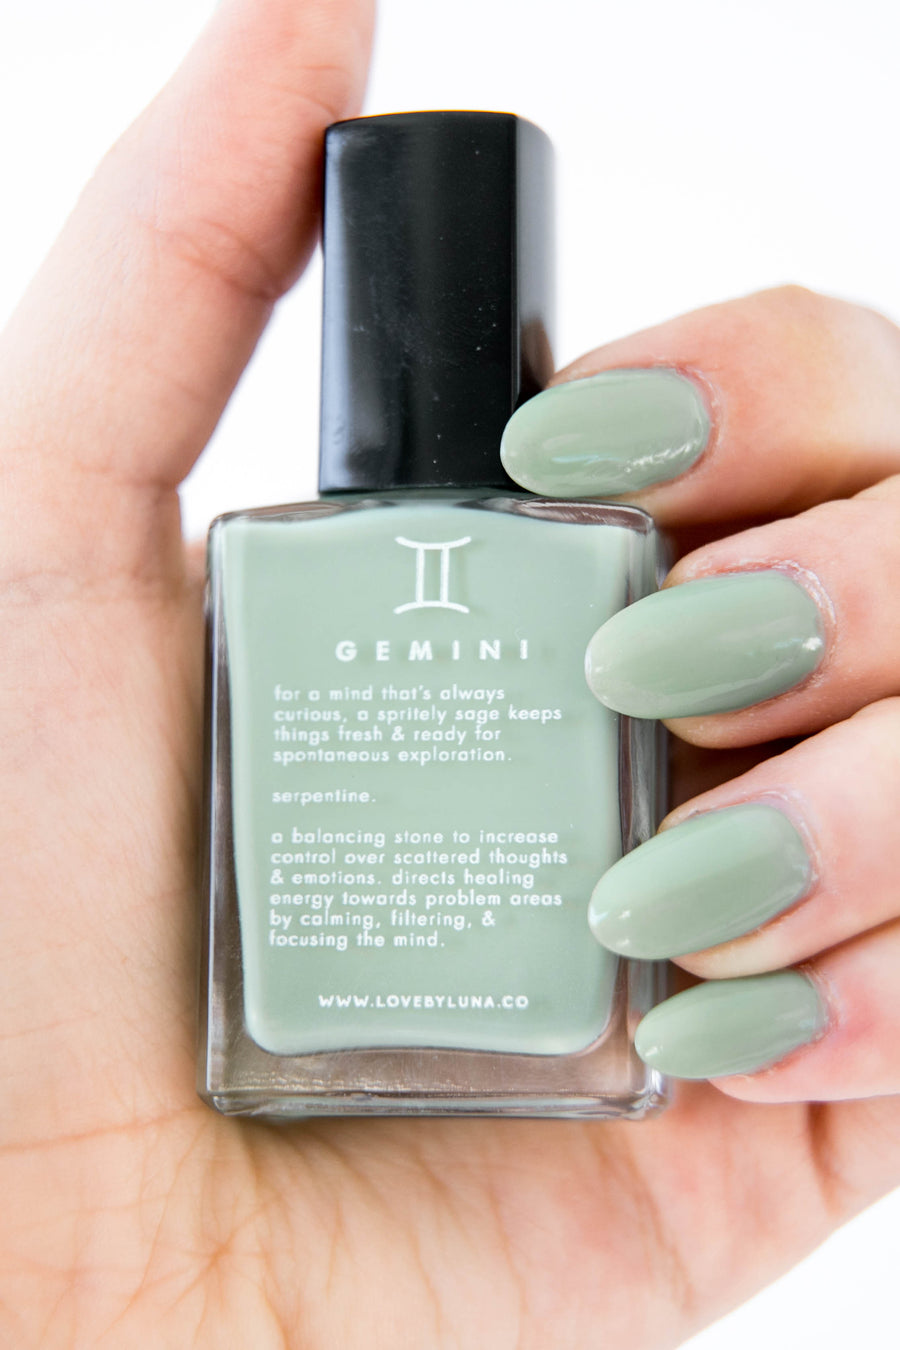 Gemini & Serpentine nail polish painted nails